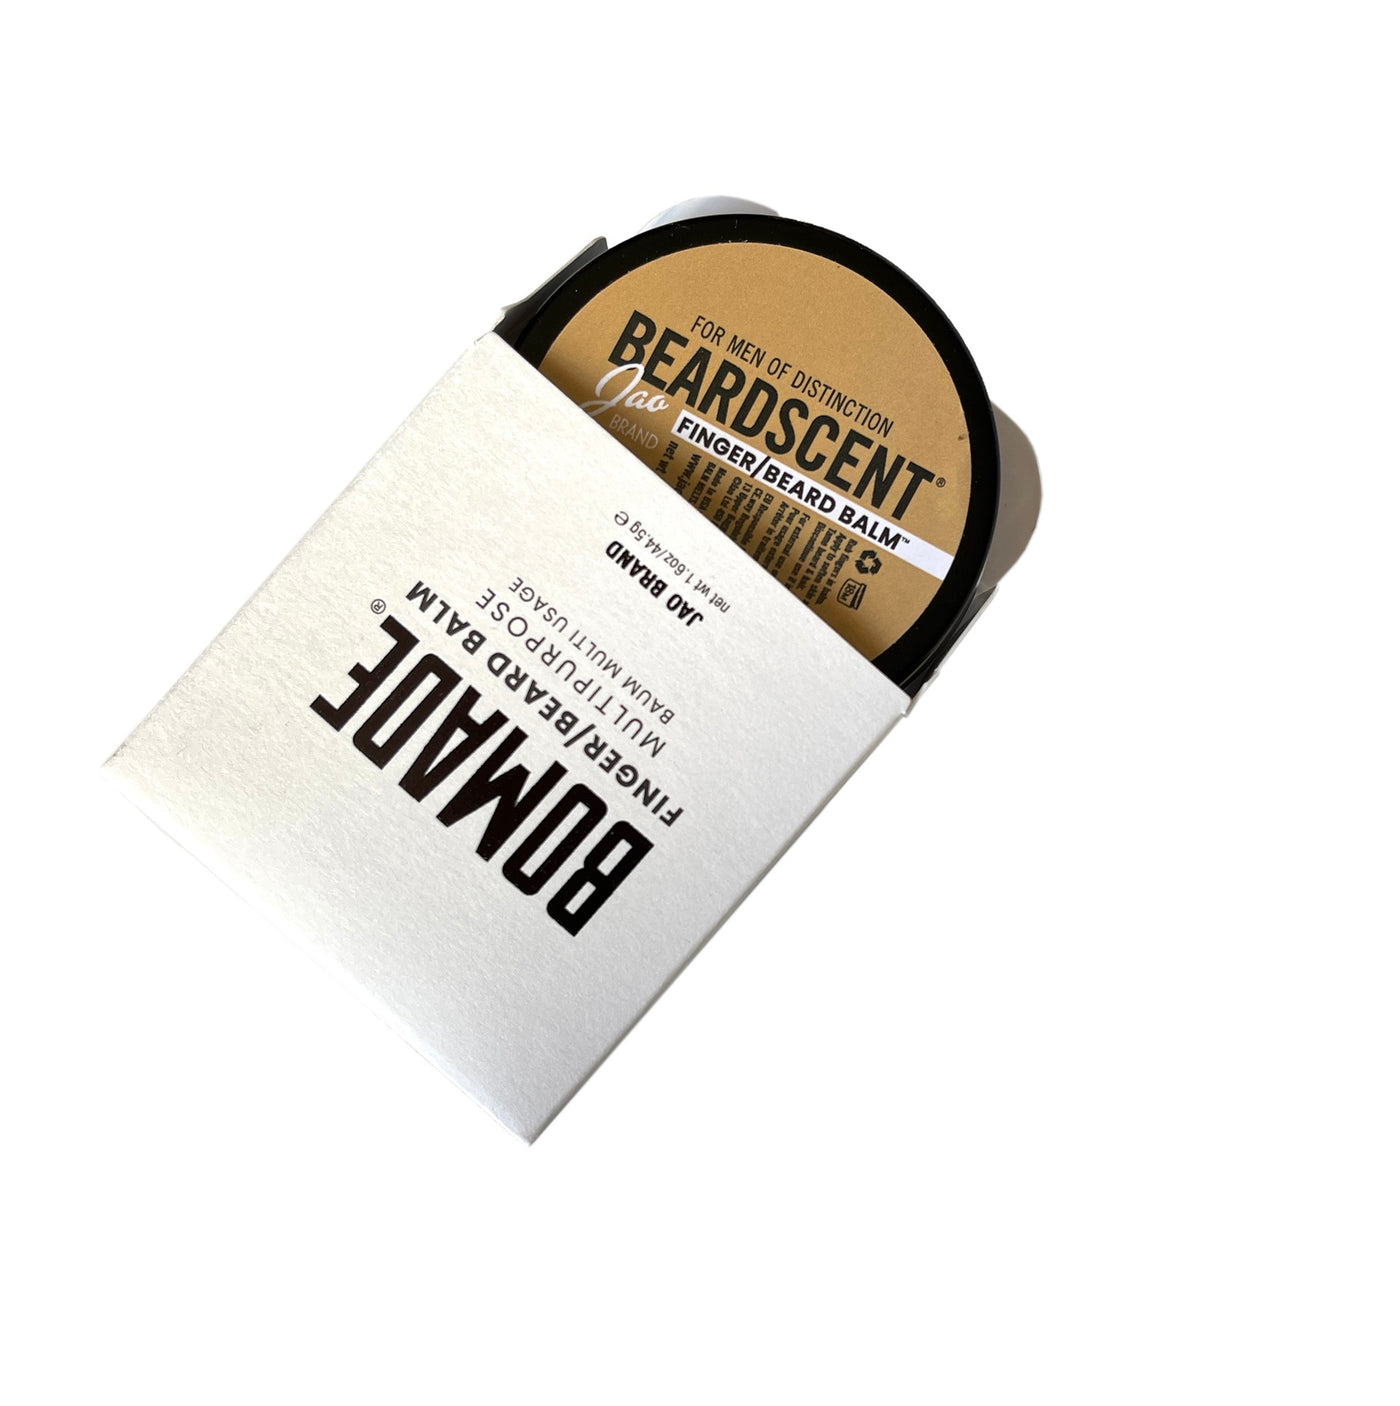 Jao Brand 100% Natural Beard Scent Bomade